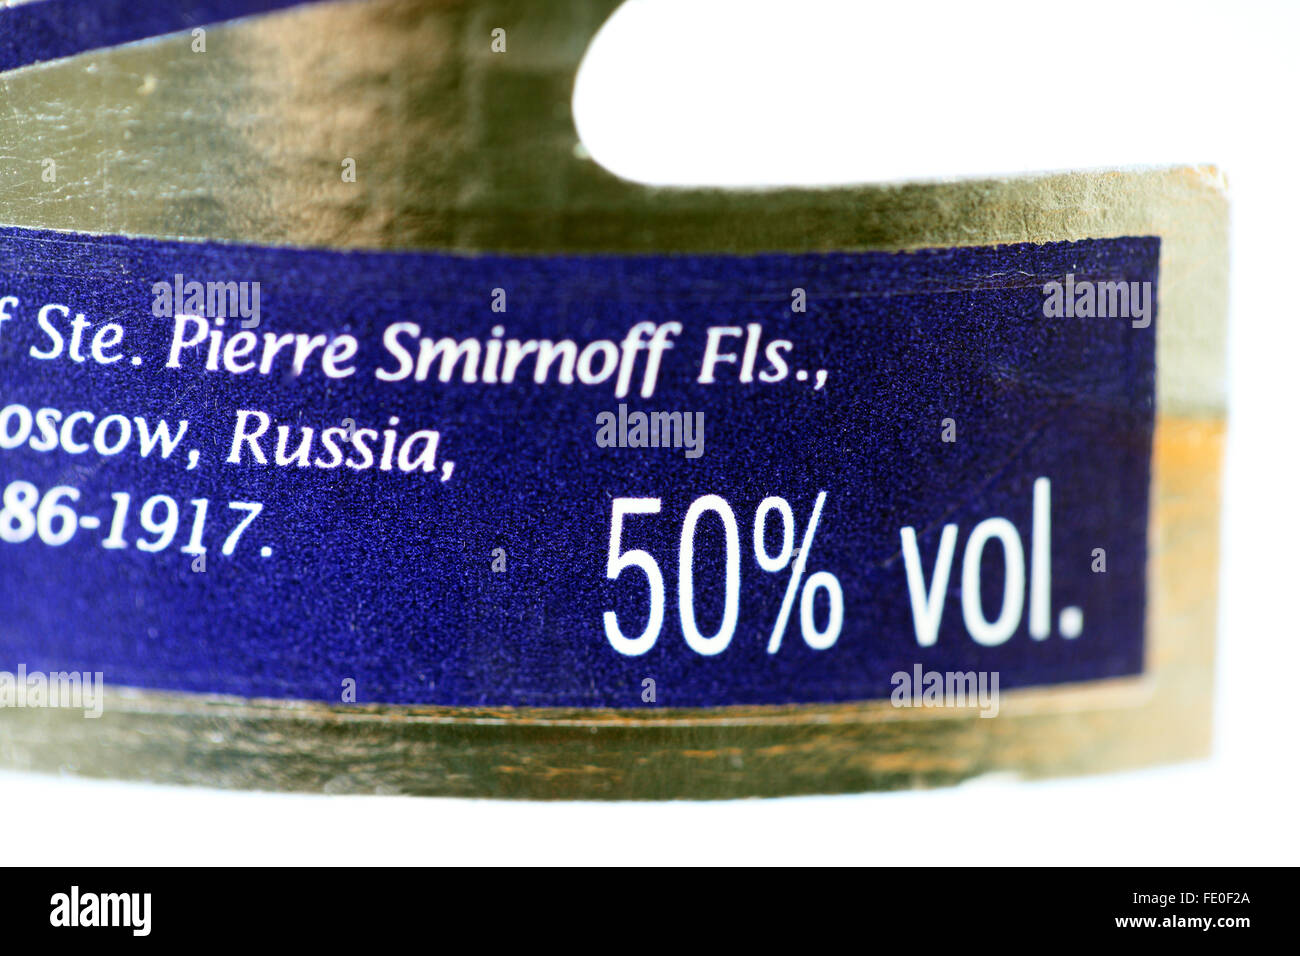 Label of Stock showing 50% volume Photo label bottle Smirnoff blue Alamy - Vokda of